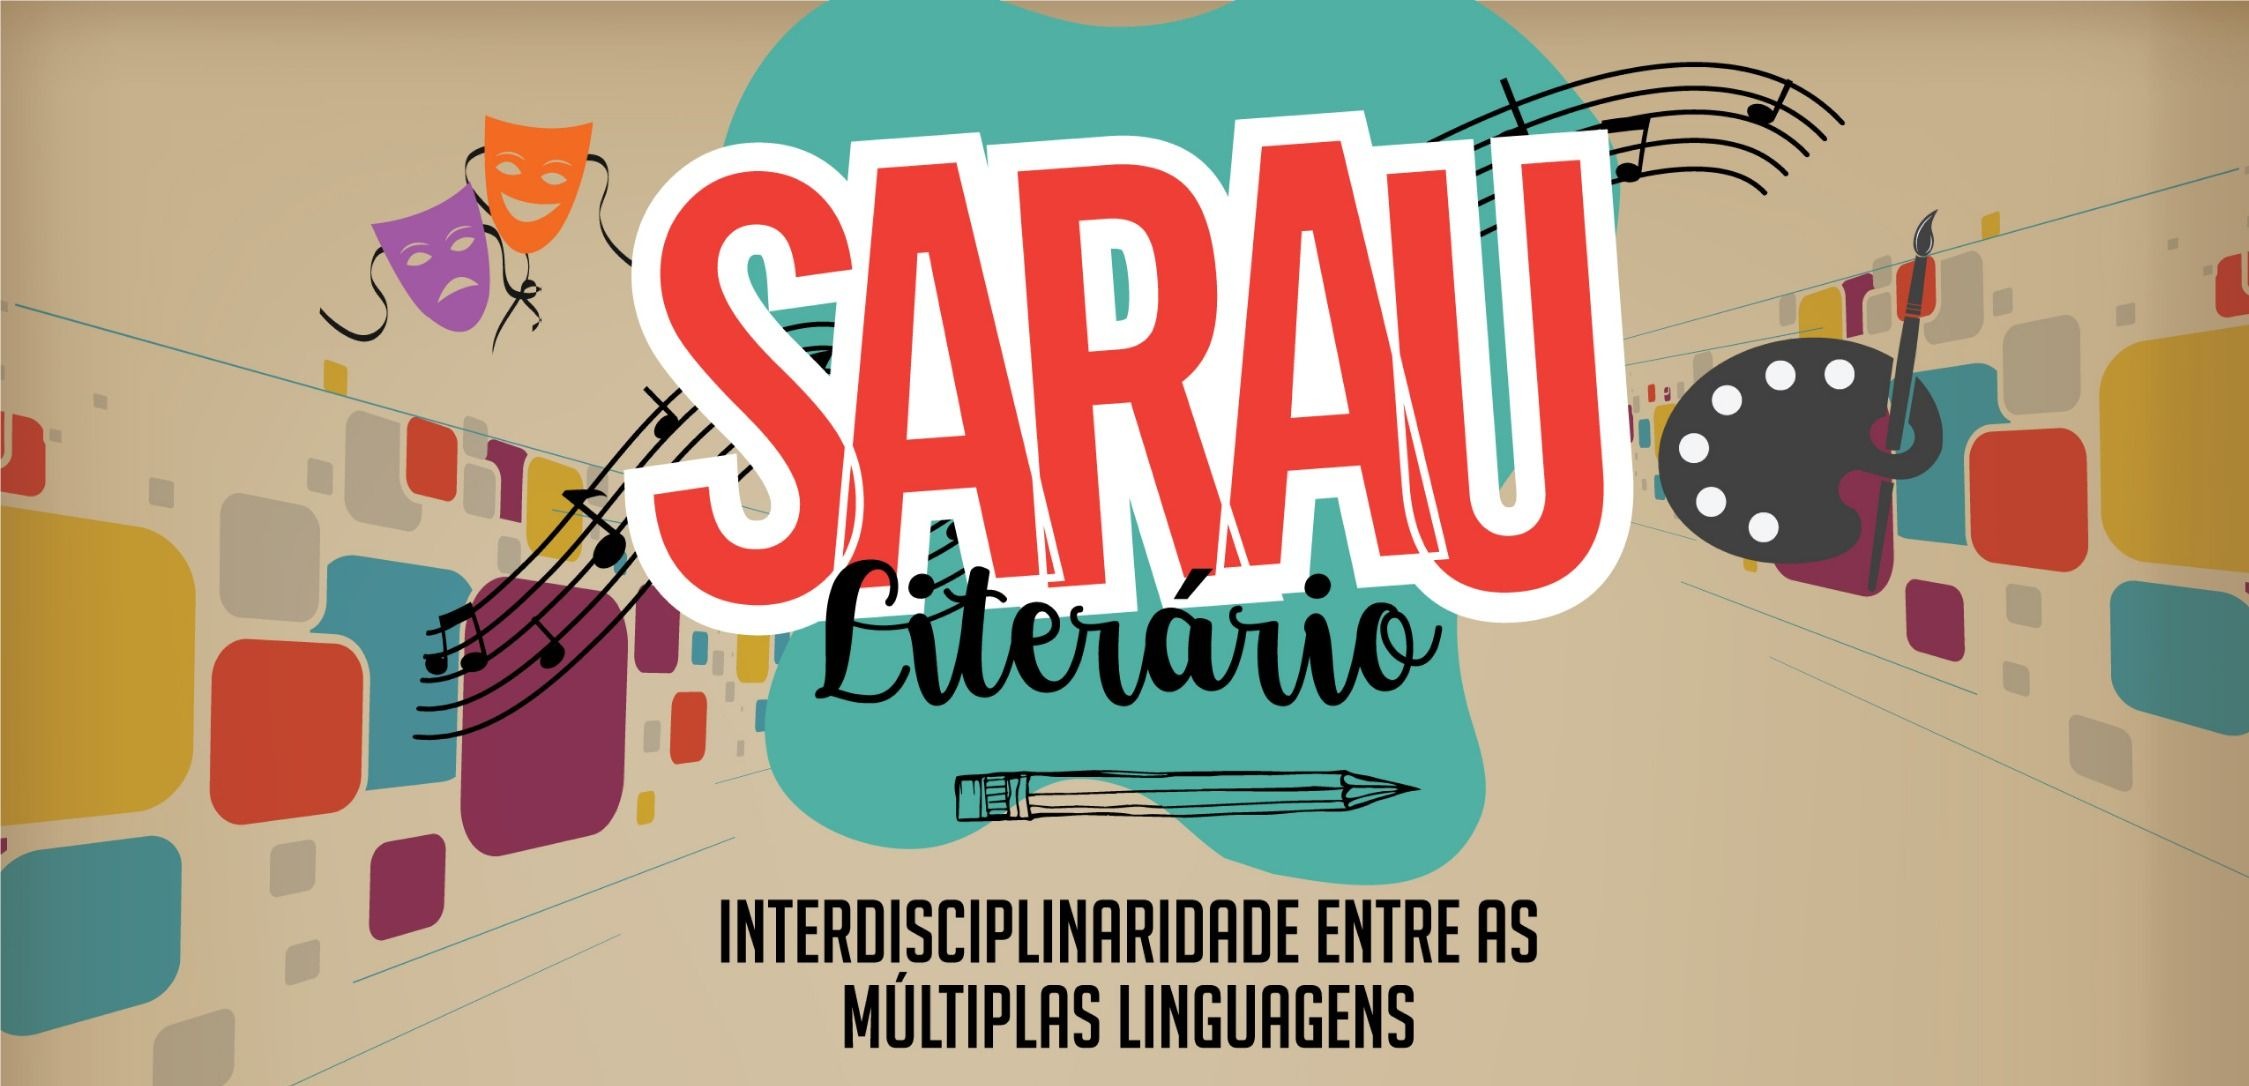 sarau_literario_uninorte-7